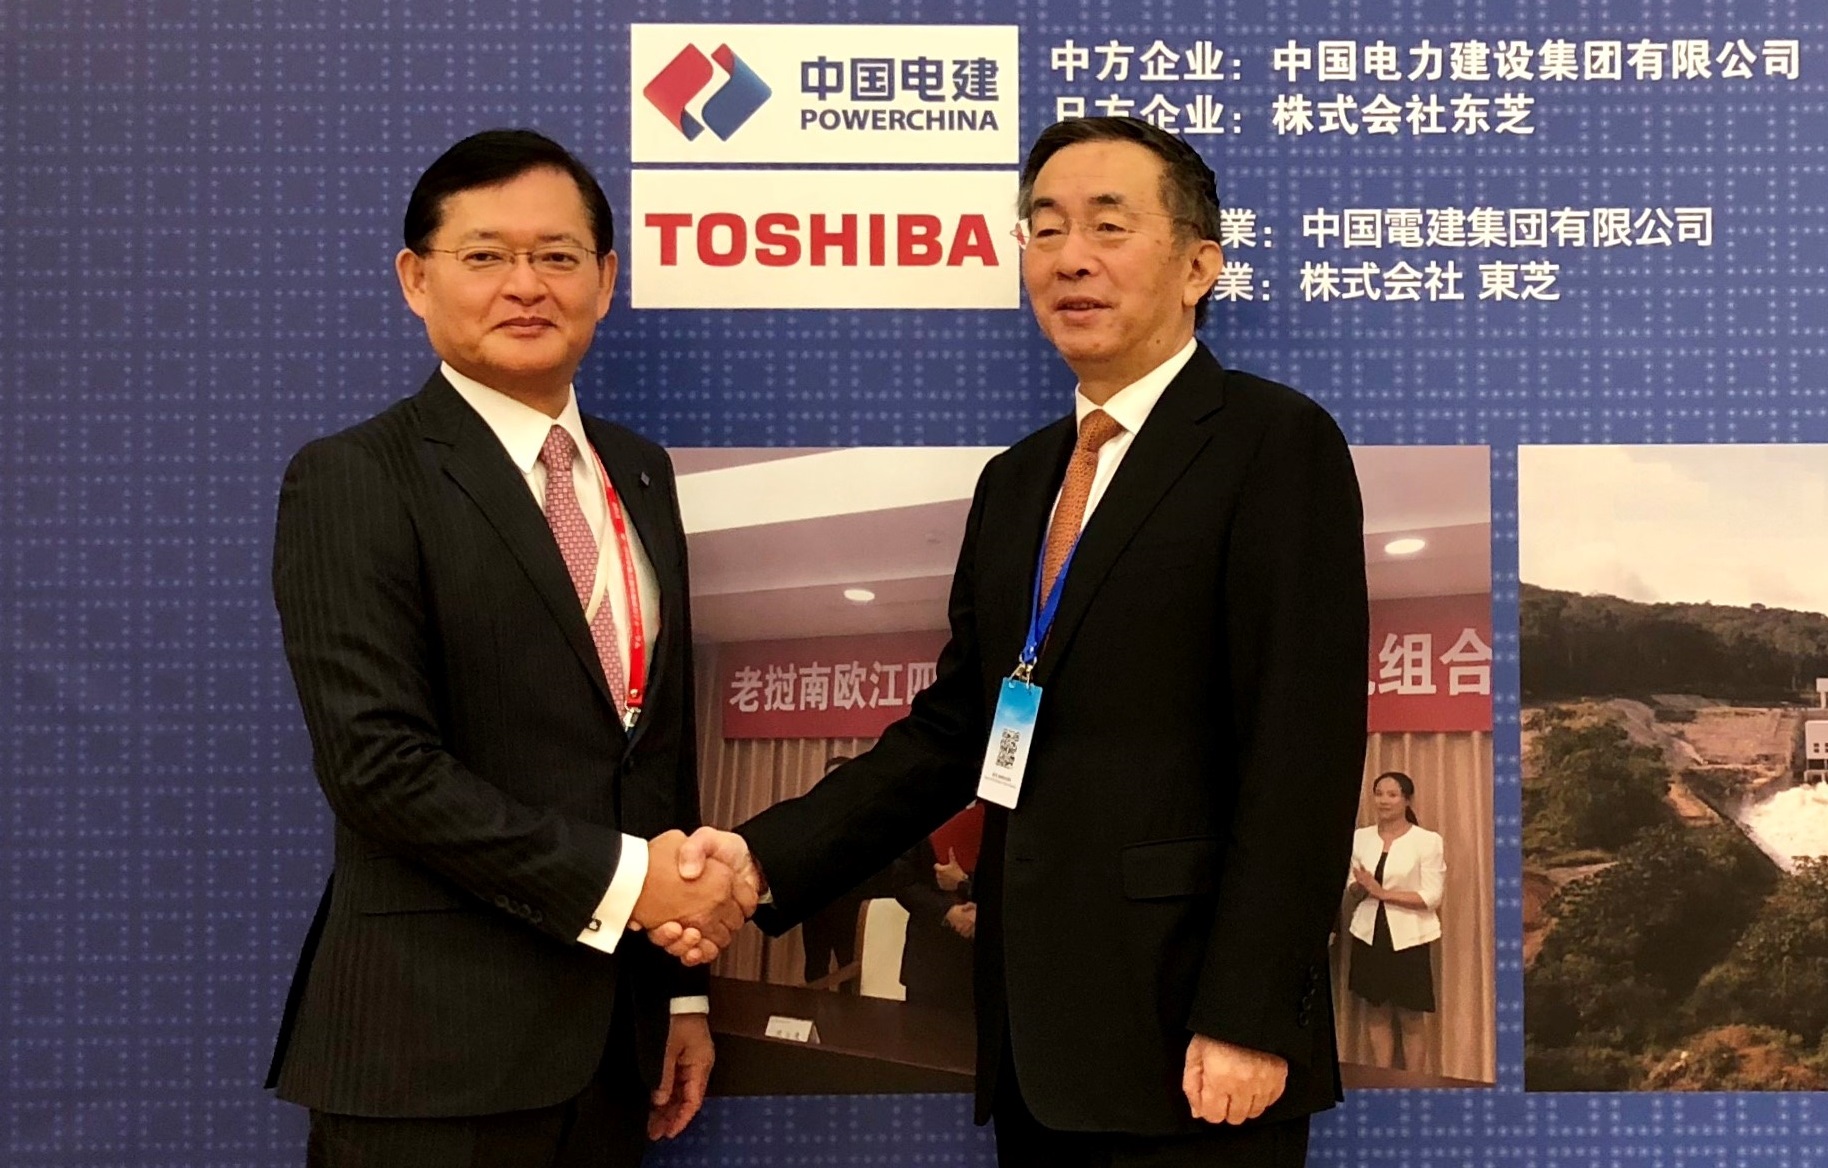 Zhiyong Yan, Chairman of POWERCHINA  and Nobuaki Kurumatani, Chairman and CEO of Toshiba, celebrate the signing of the Agreement at the China-Japan Third-Party Market Cooperation Forum